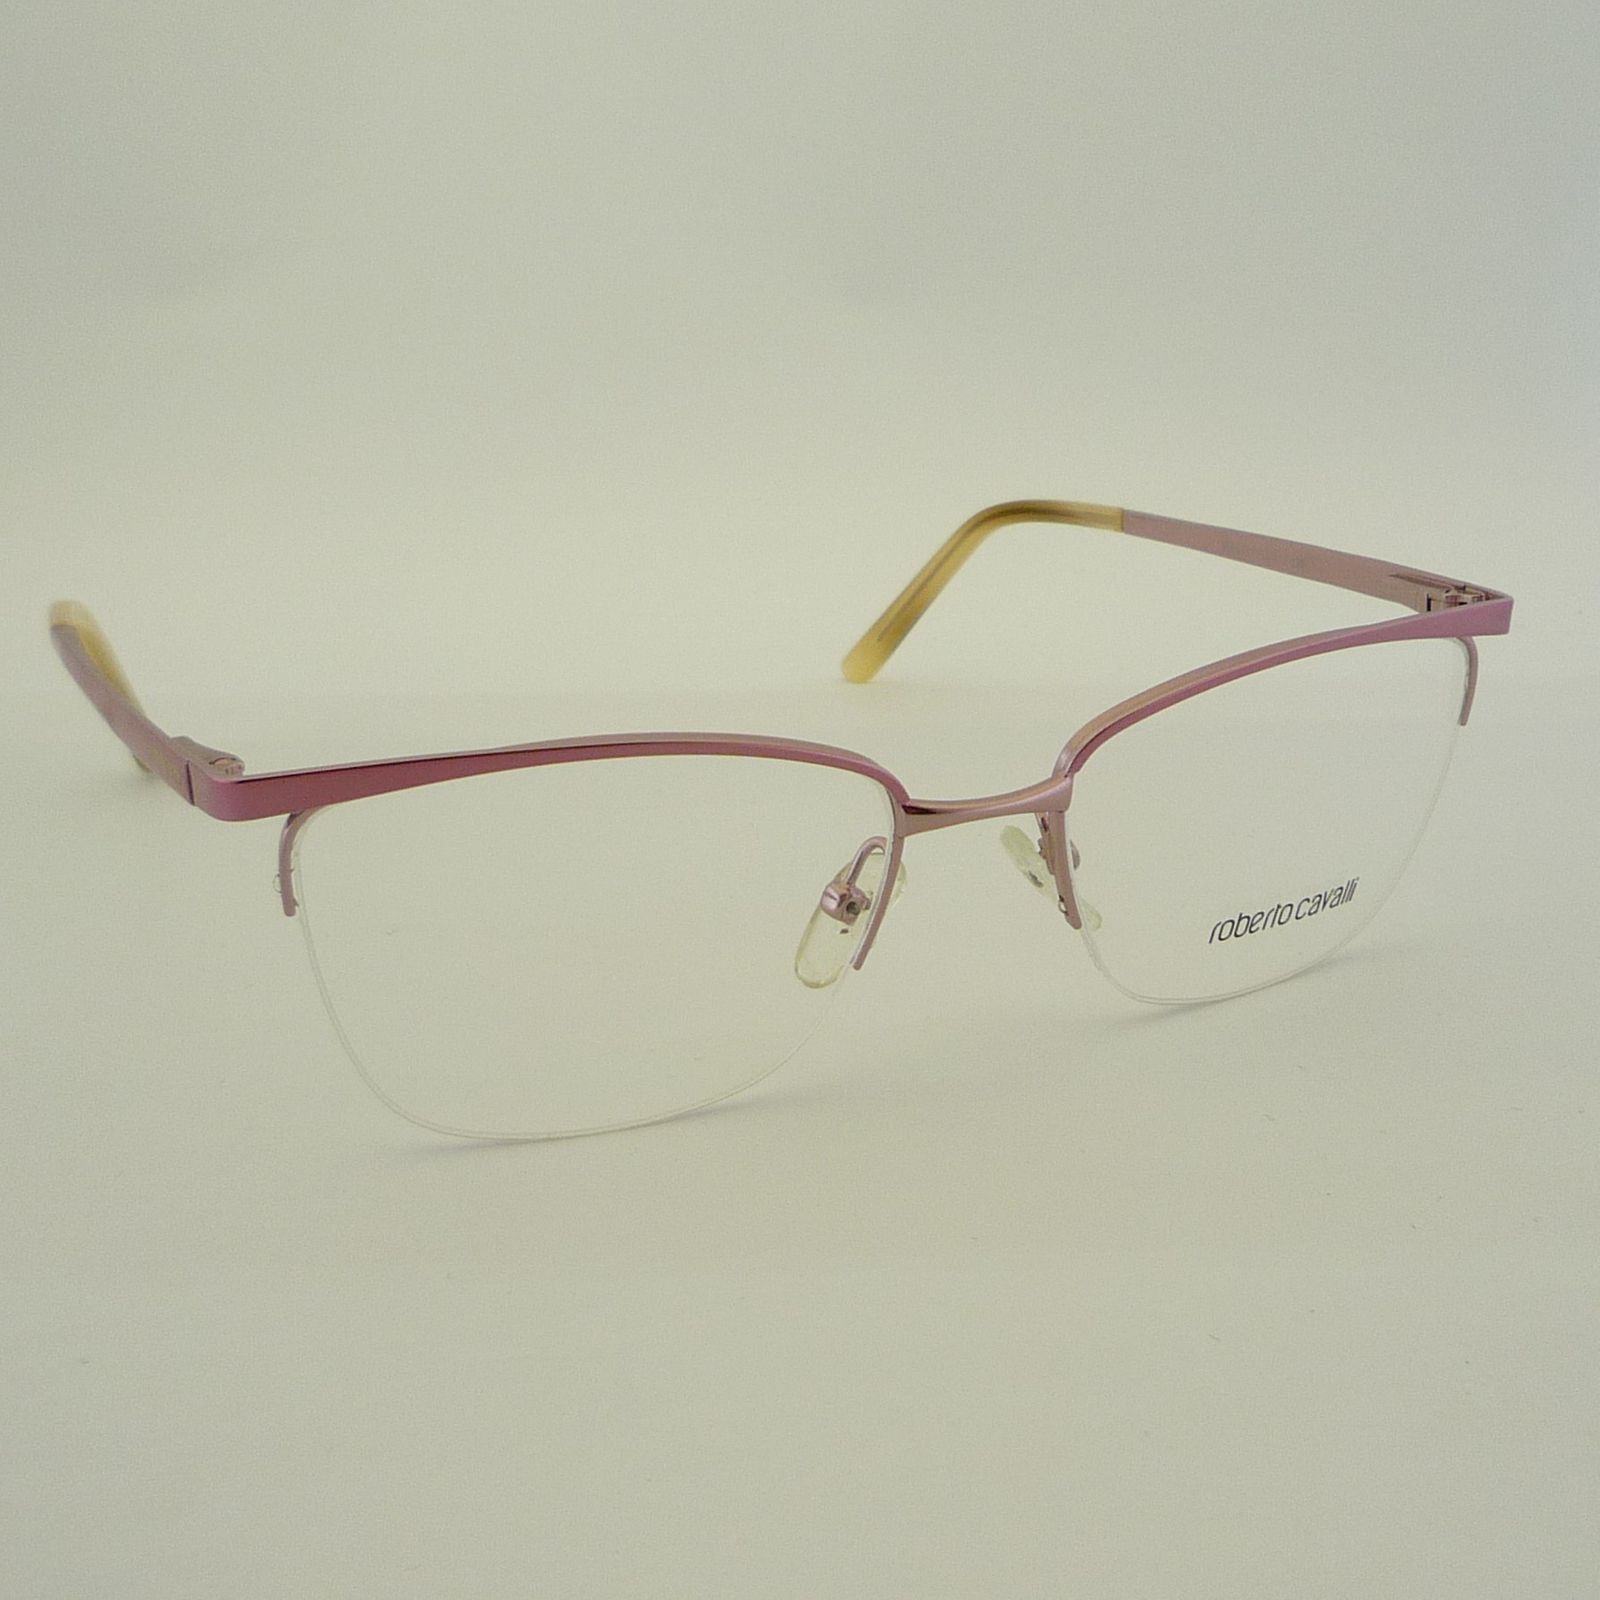 فریم عینک طبی زنانه روبرتو کاوالی مدل 6581c6 -  - 4